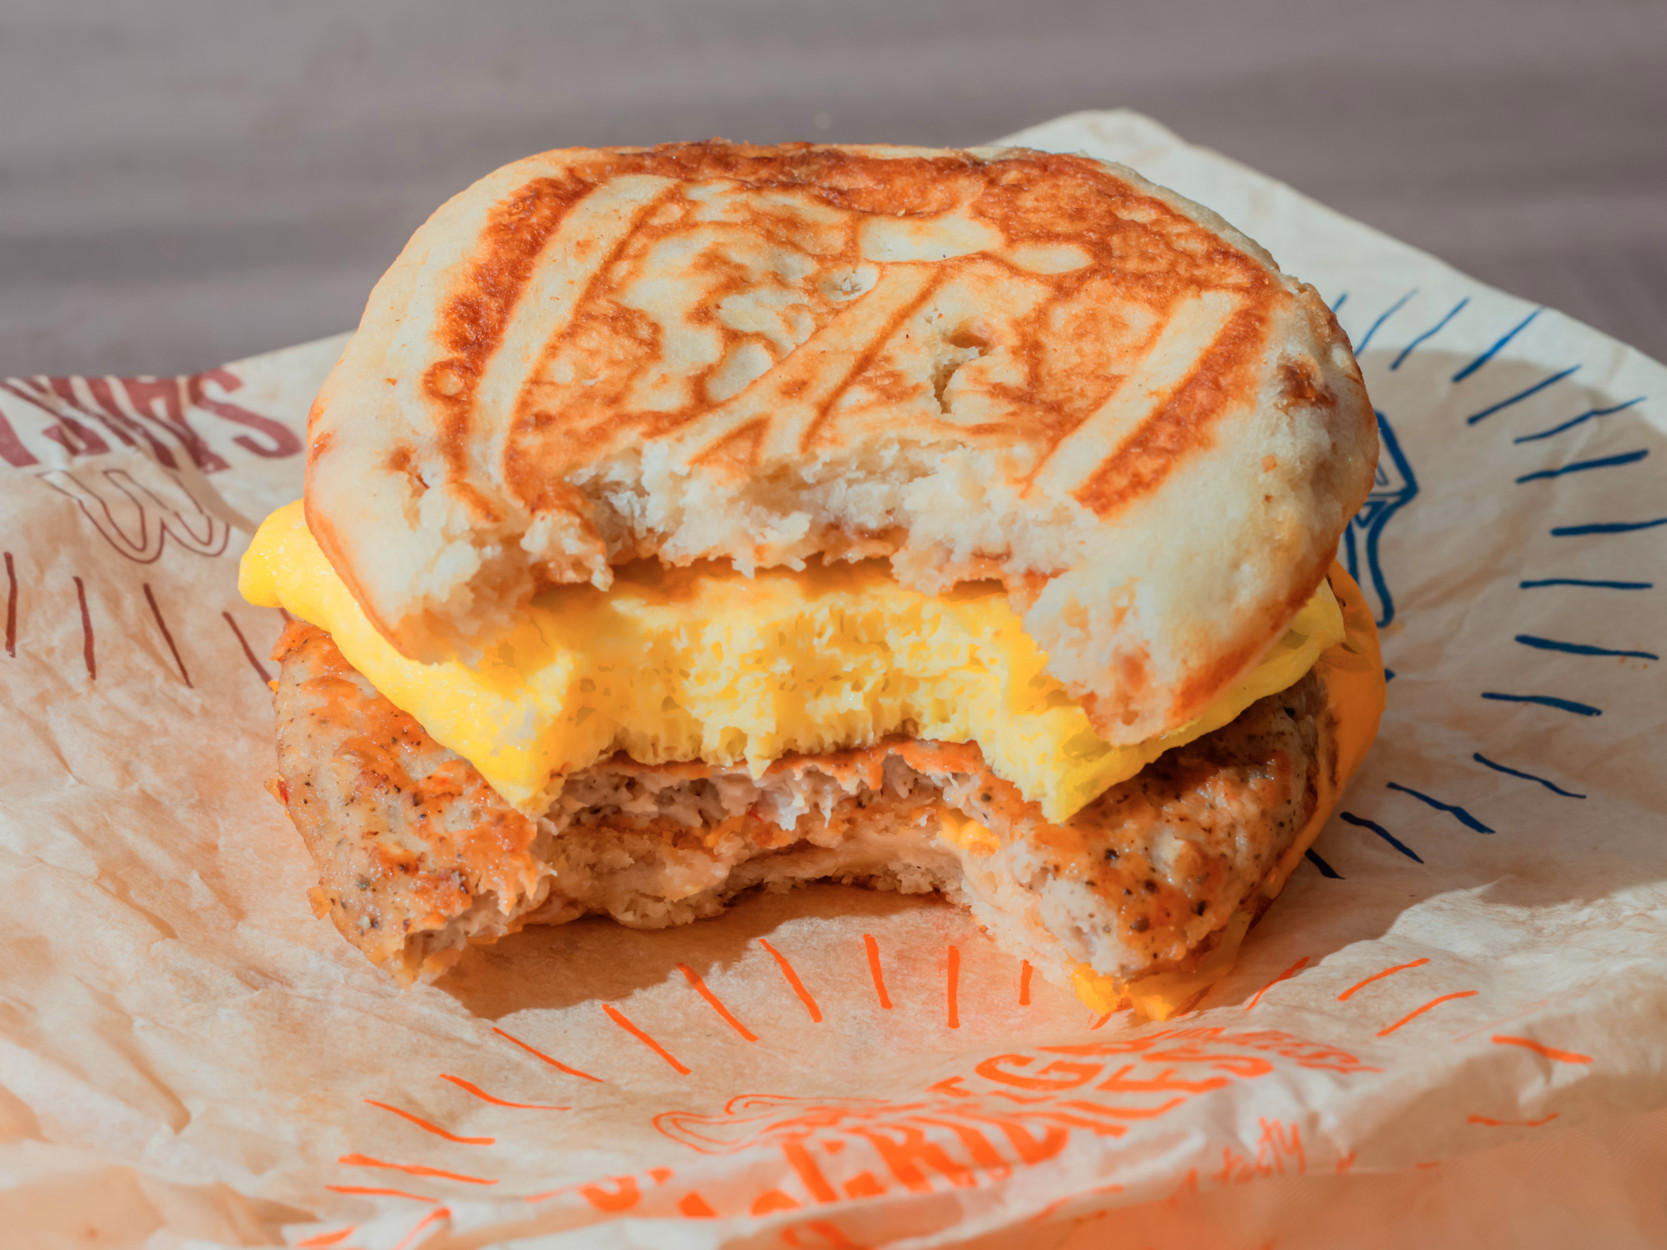 Healthy Fast Food Breakfast Mcdonalds
 Healthy breakfasts at McDonald s Panera Starbucks